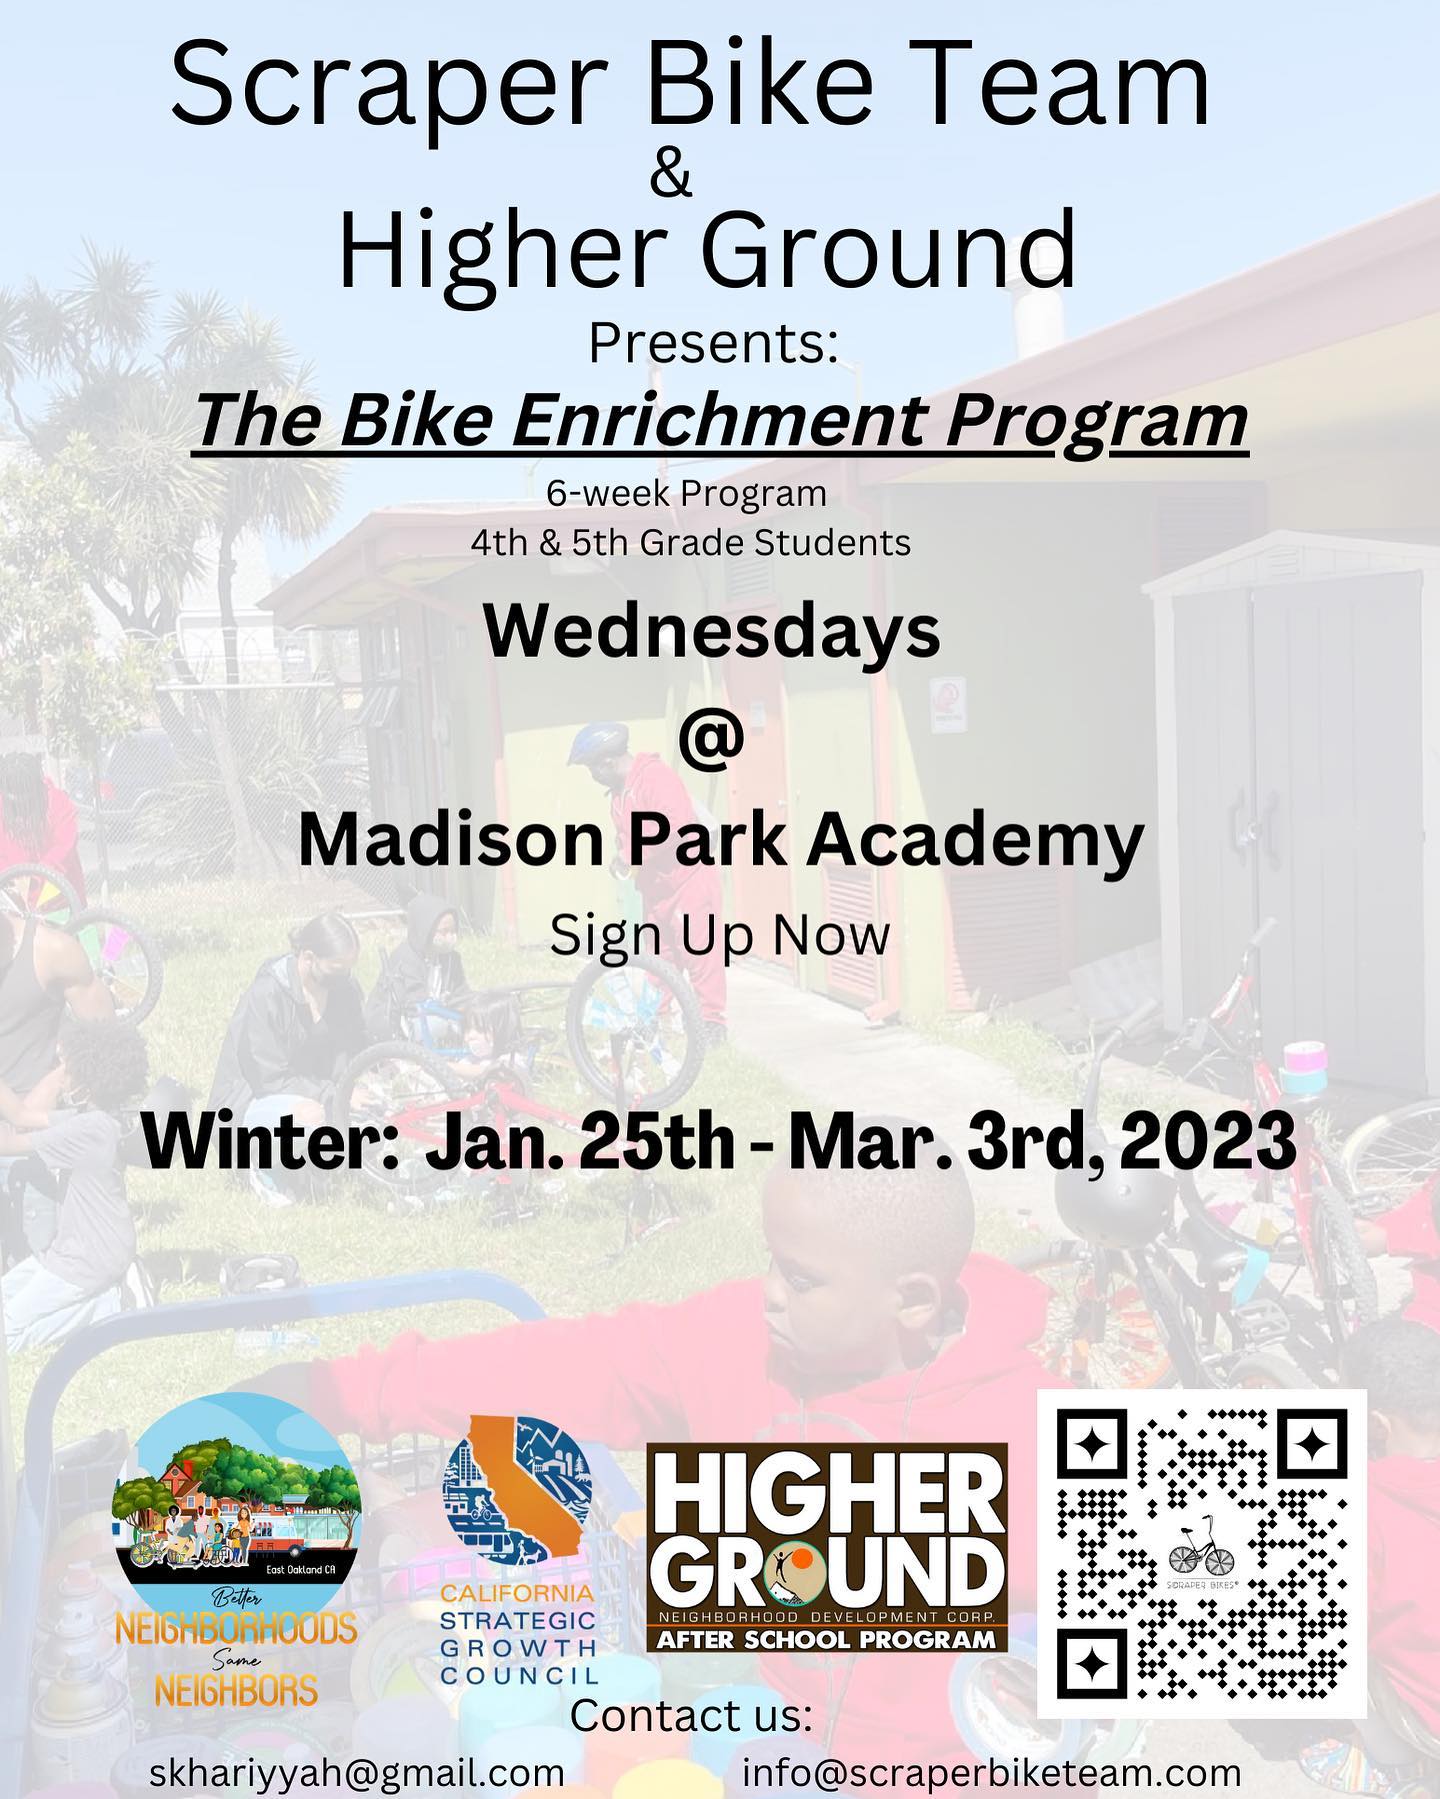 Bike enrichment program at Madison Park Academy